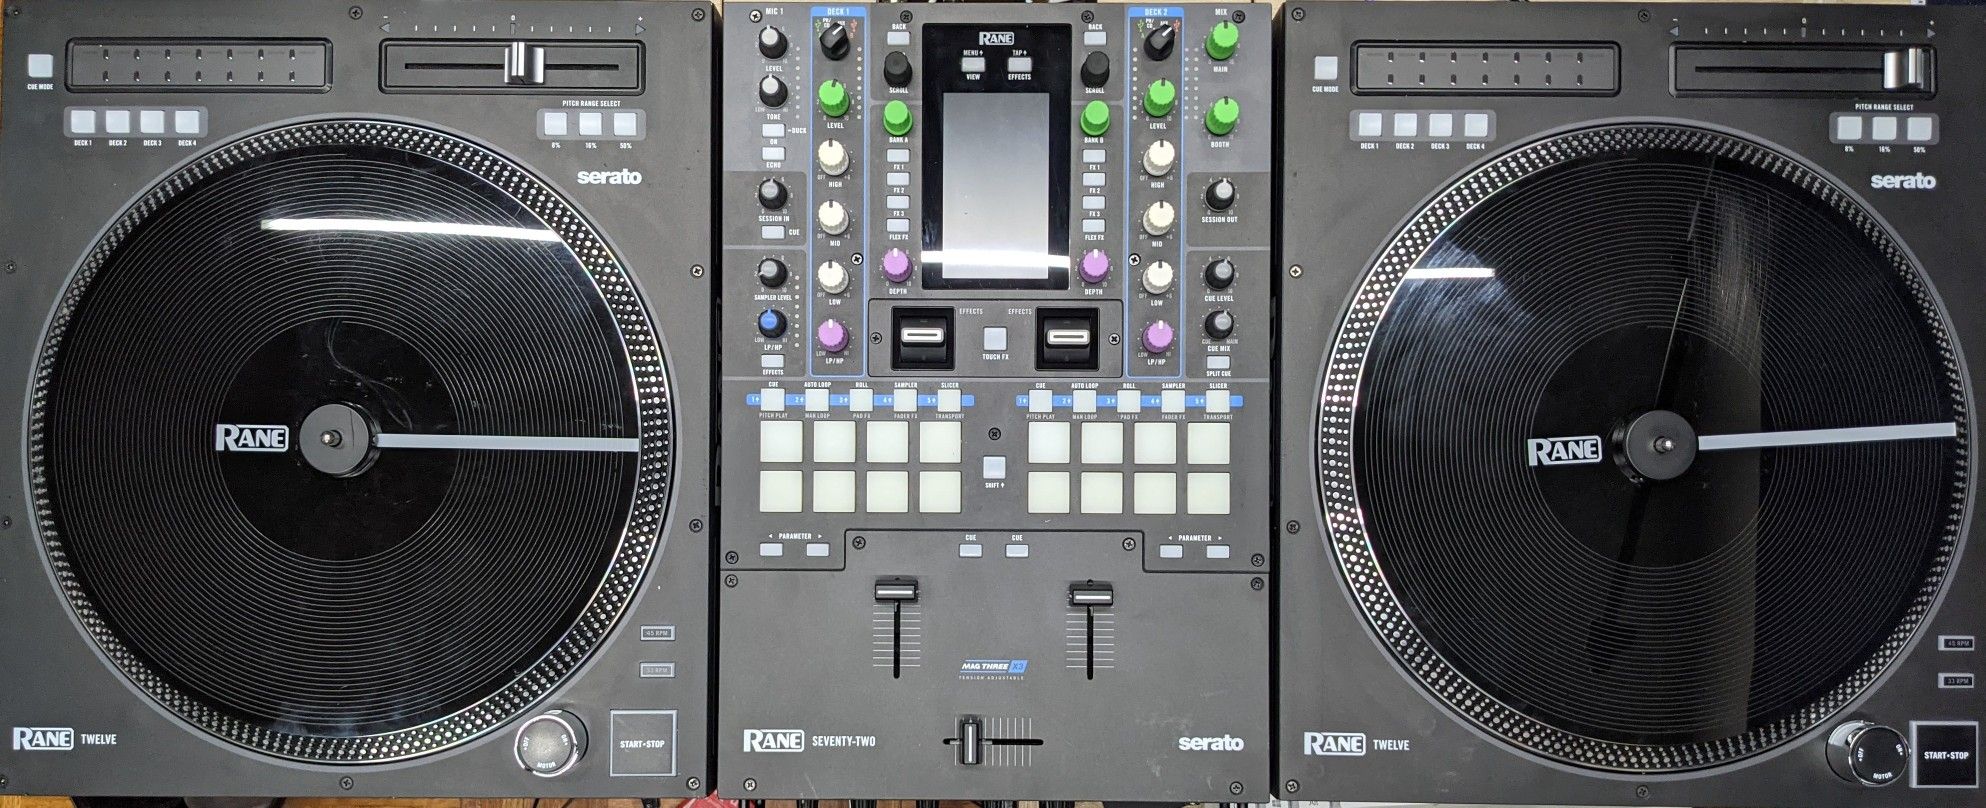 Rane Seventy Two Mixer & Twelve DJ Setup